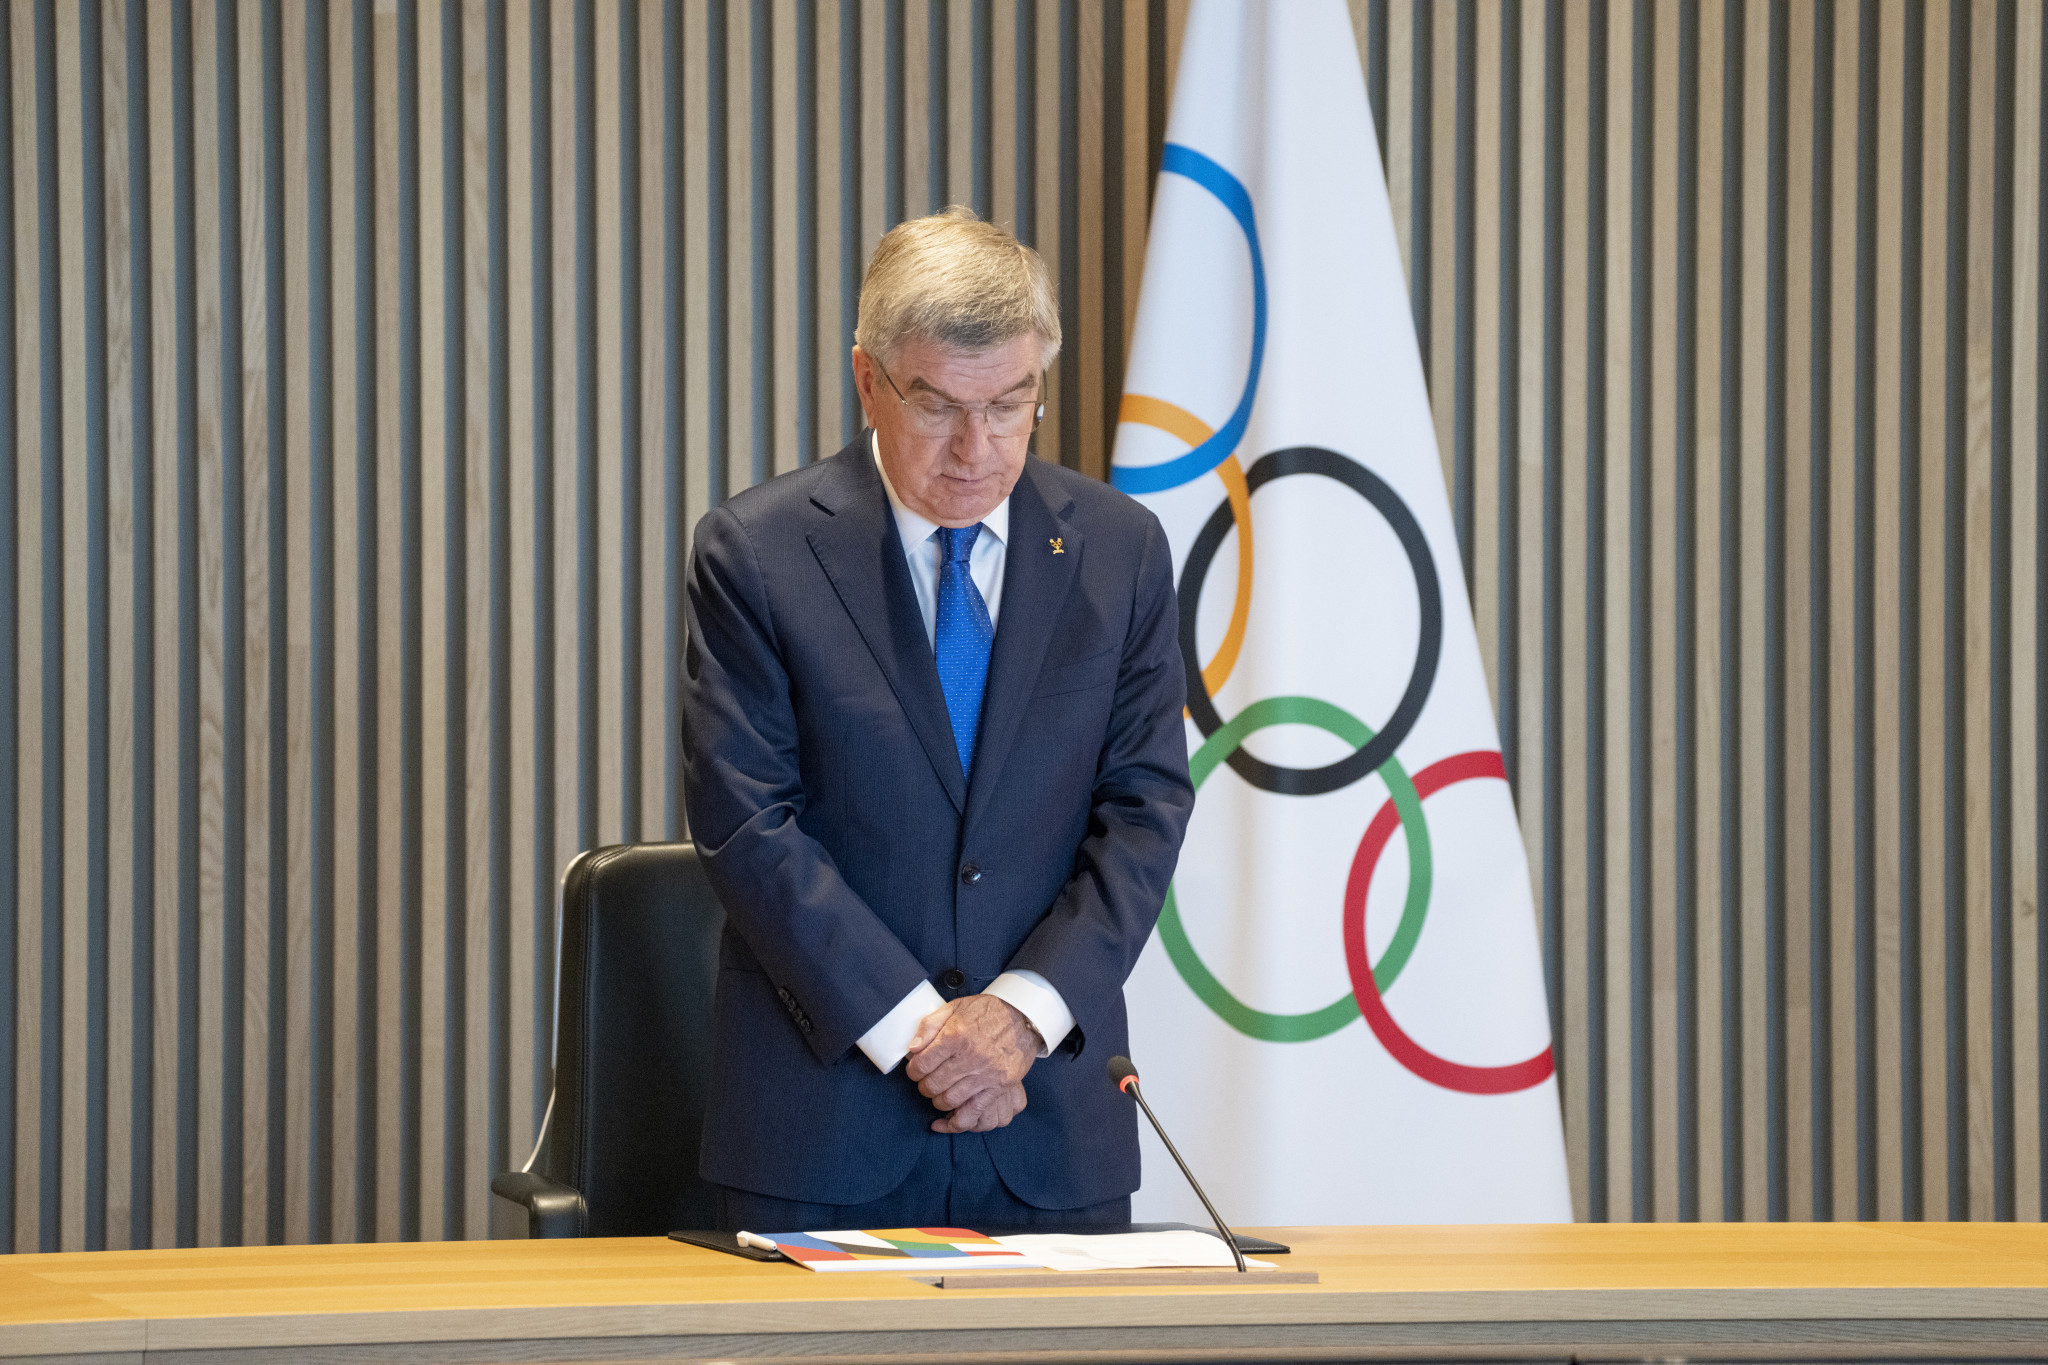 IOC President Thomas Bach reiterated that the Munich Massacre was 